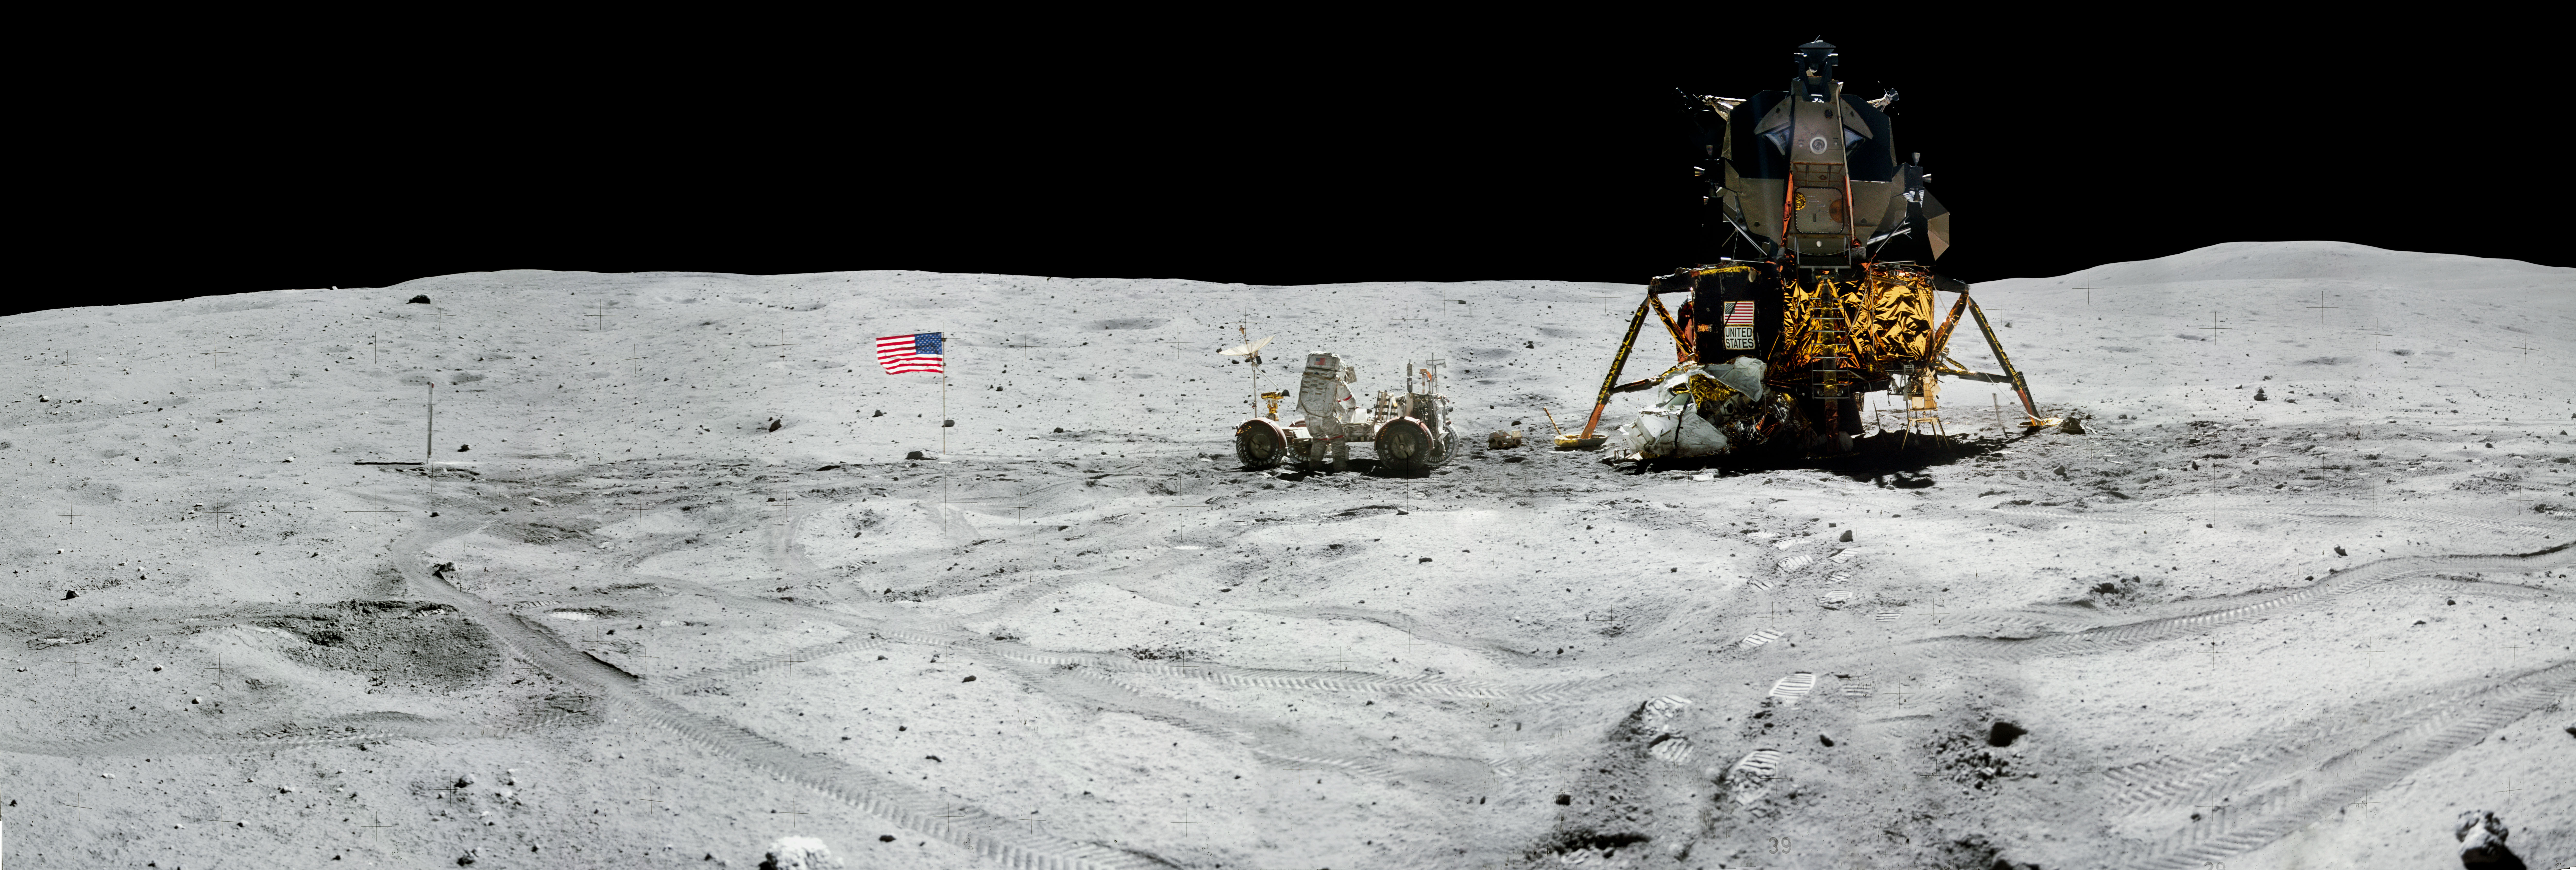 Пилотируемый полет на луну. Миссия Аполлон 11. Аполлон-11 фото. Аполлон 16 на Луне 1972. Апполо 11 на Луне.